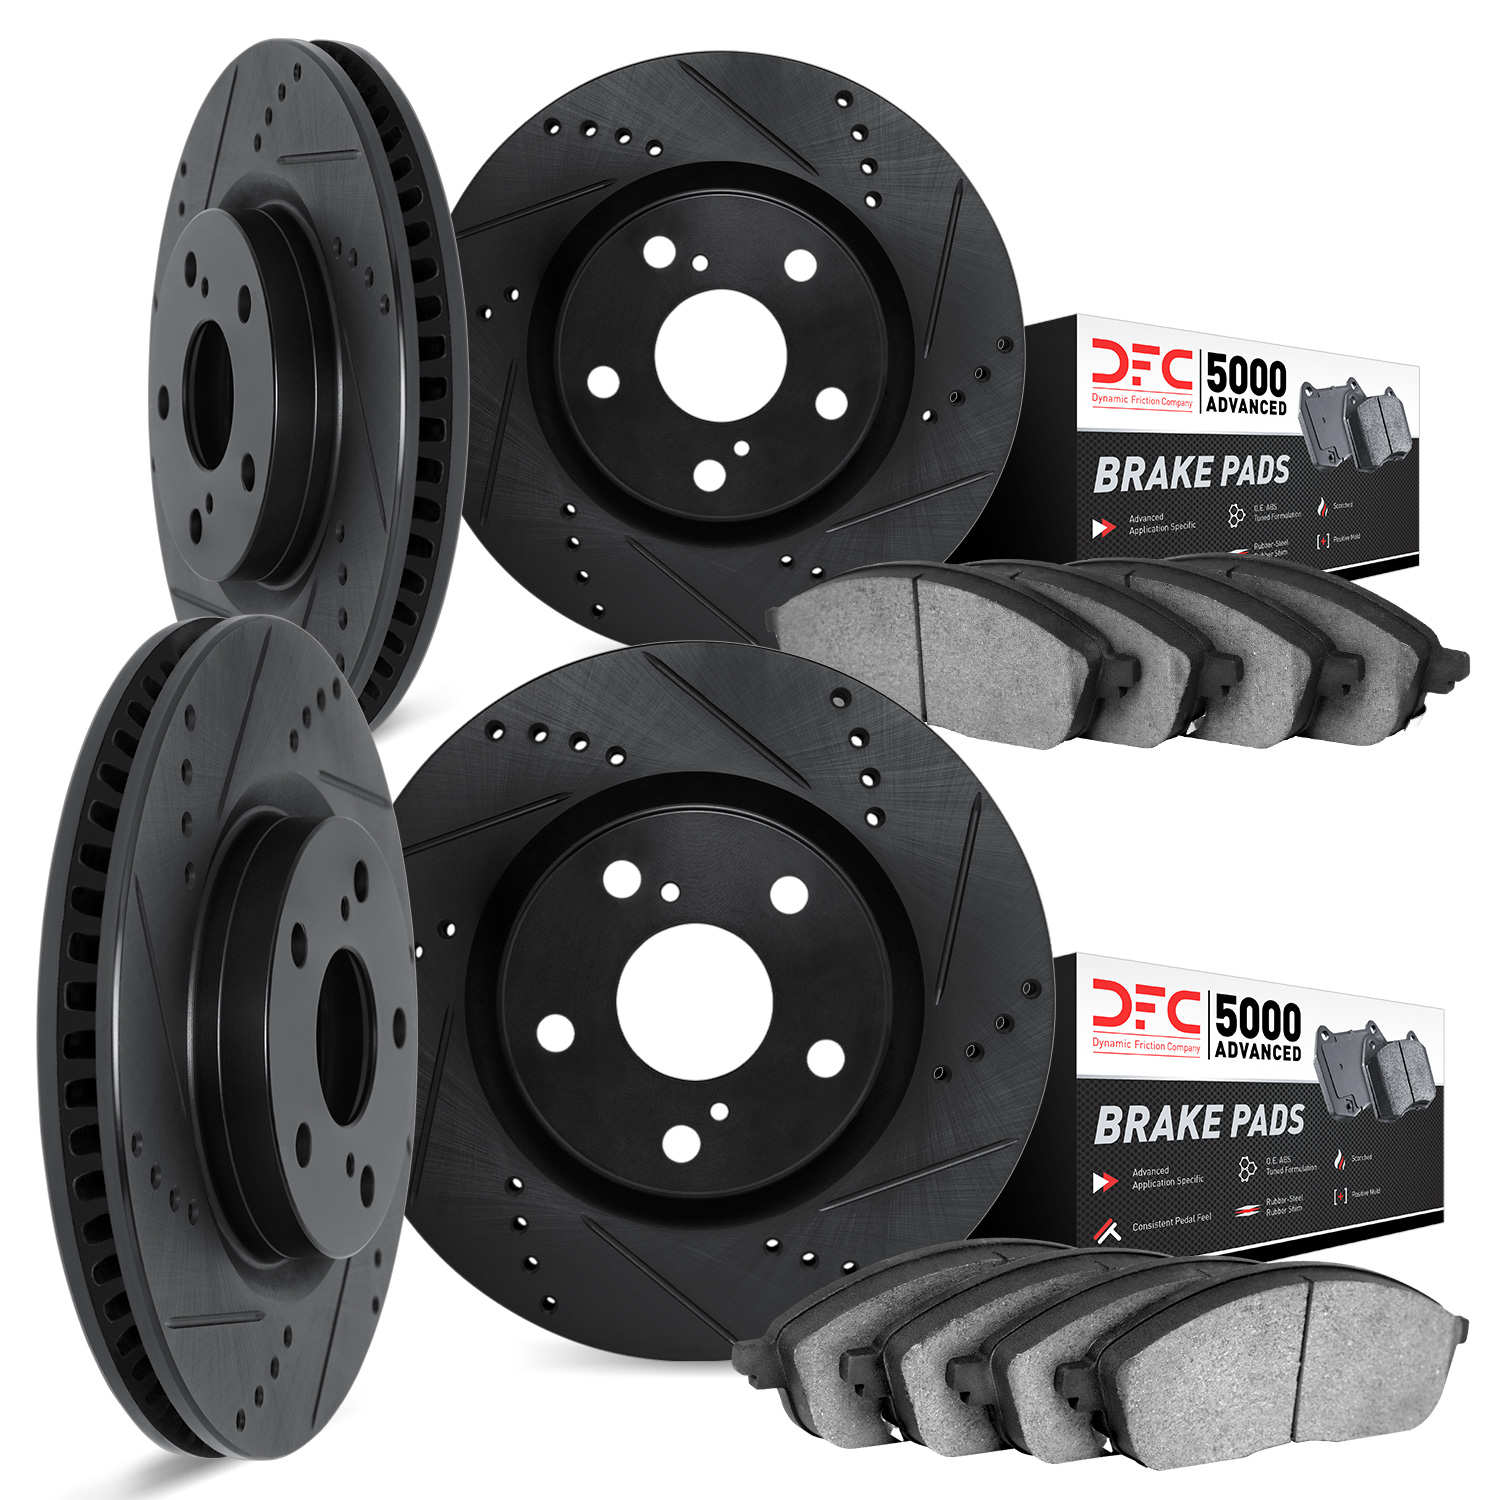 8504-42051 Drilled/Slotted Brake Rotors w/5000 Advanced Brake Pads Kit [Black], 2006-2010 Mopar, Position: Front and Rear